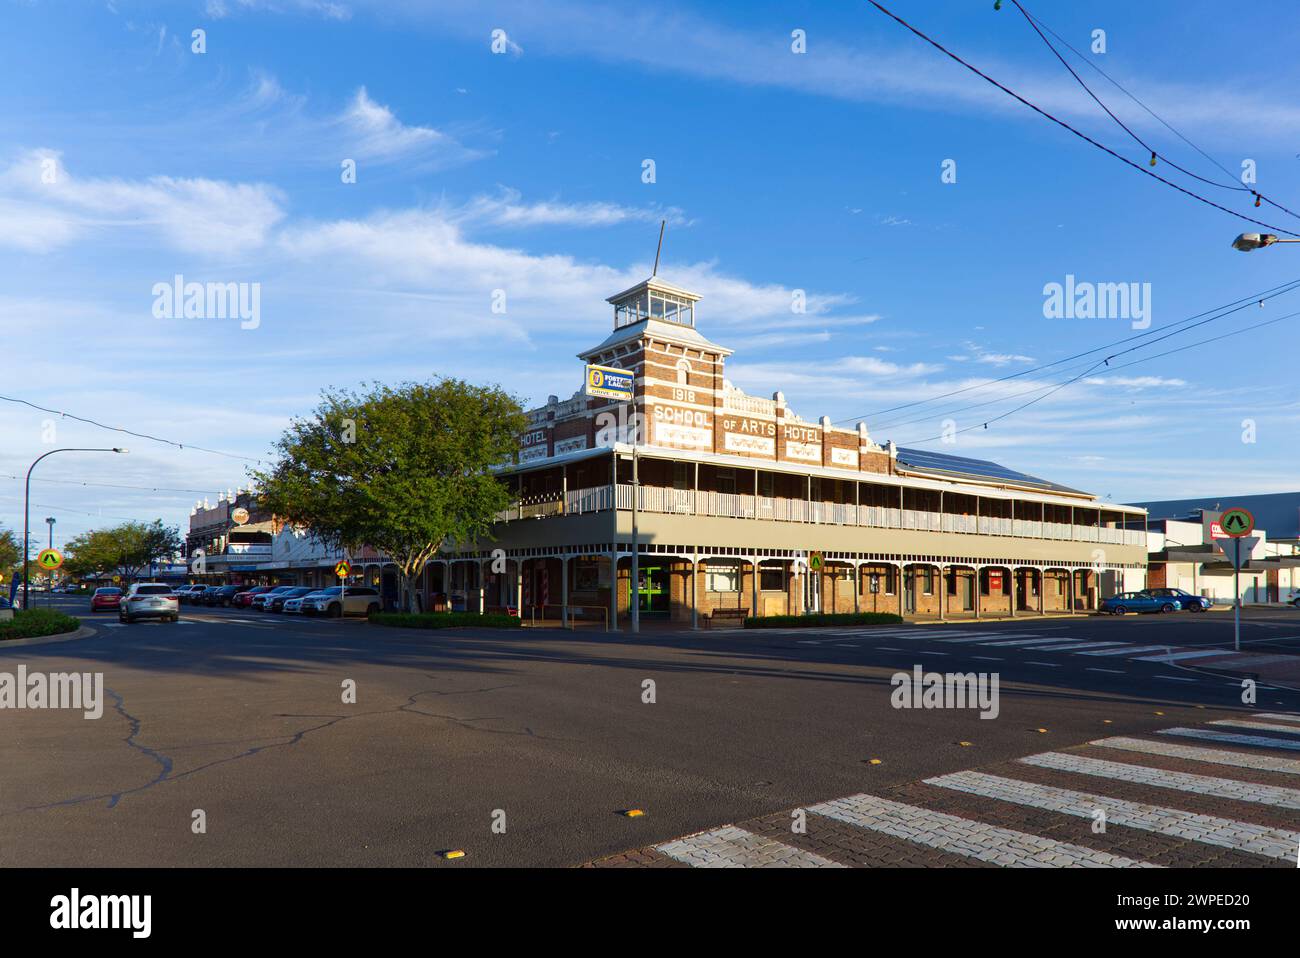 Hôtel Historic School of Arts sur McDowall Street Roma Queensland Australie Banque D'Images